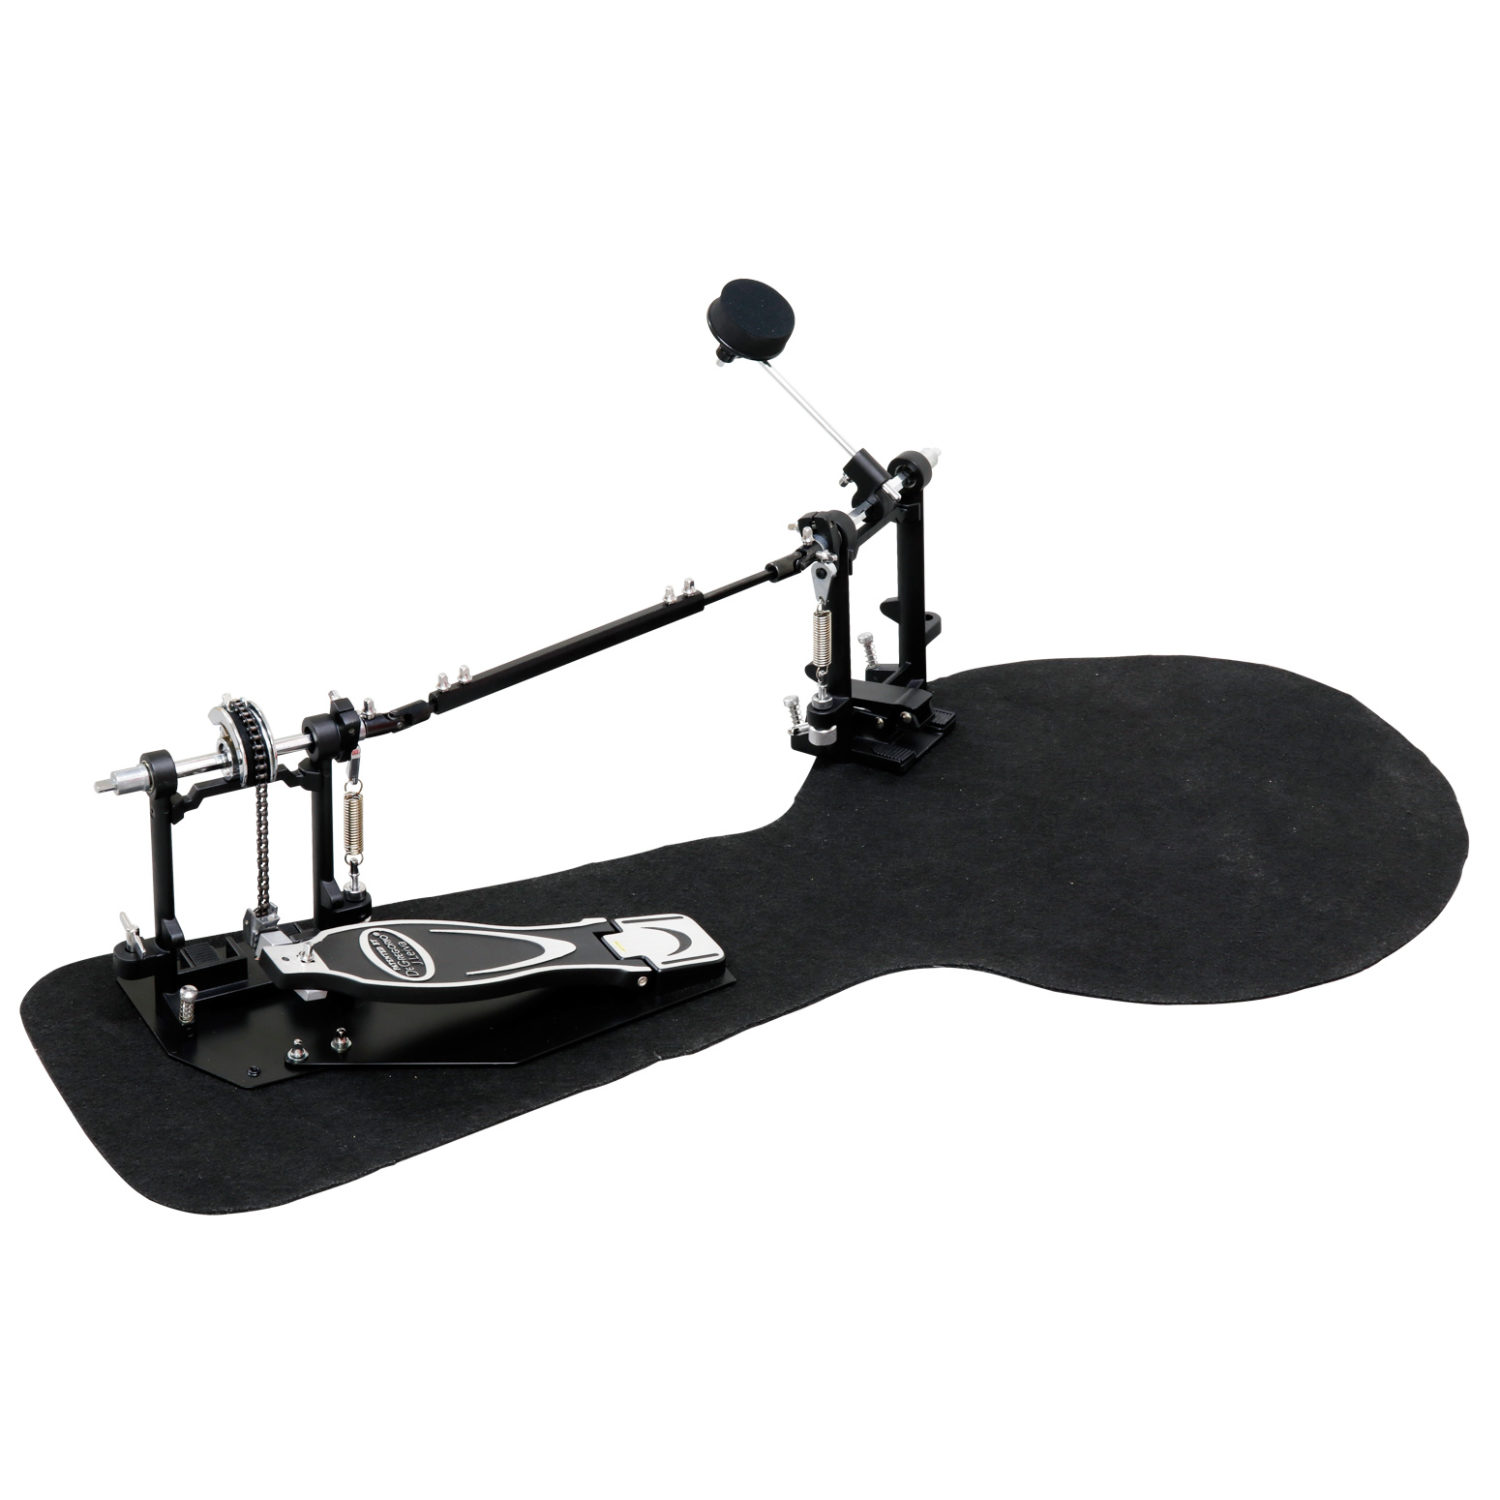 DrumBox PLUS pedal setパネル画像